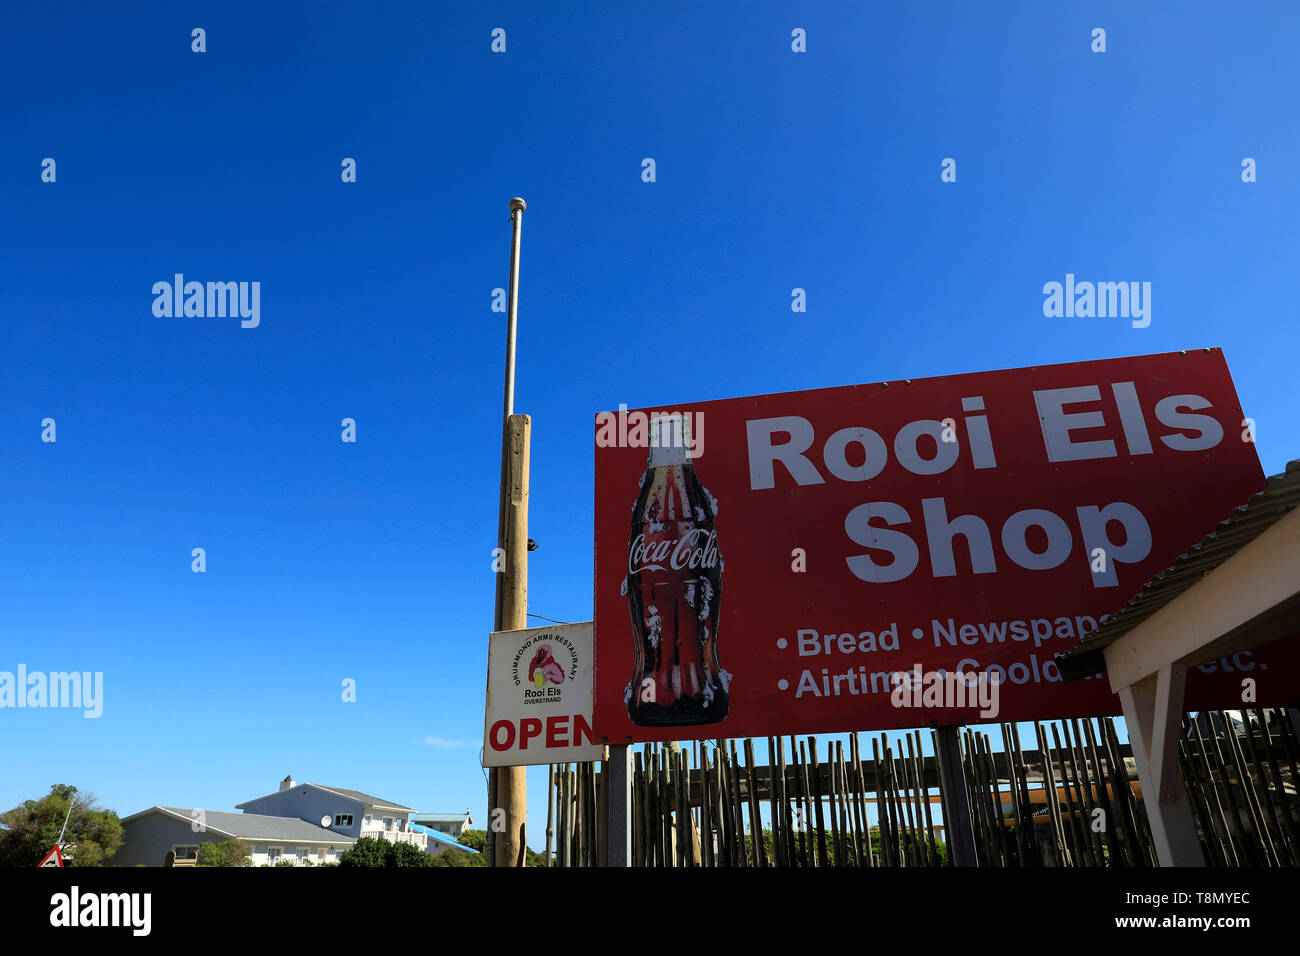 Els Rooi Shop in Rooi-Els, Provincia del Capo Occidentale, Sud Africa. Foto Stock